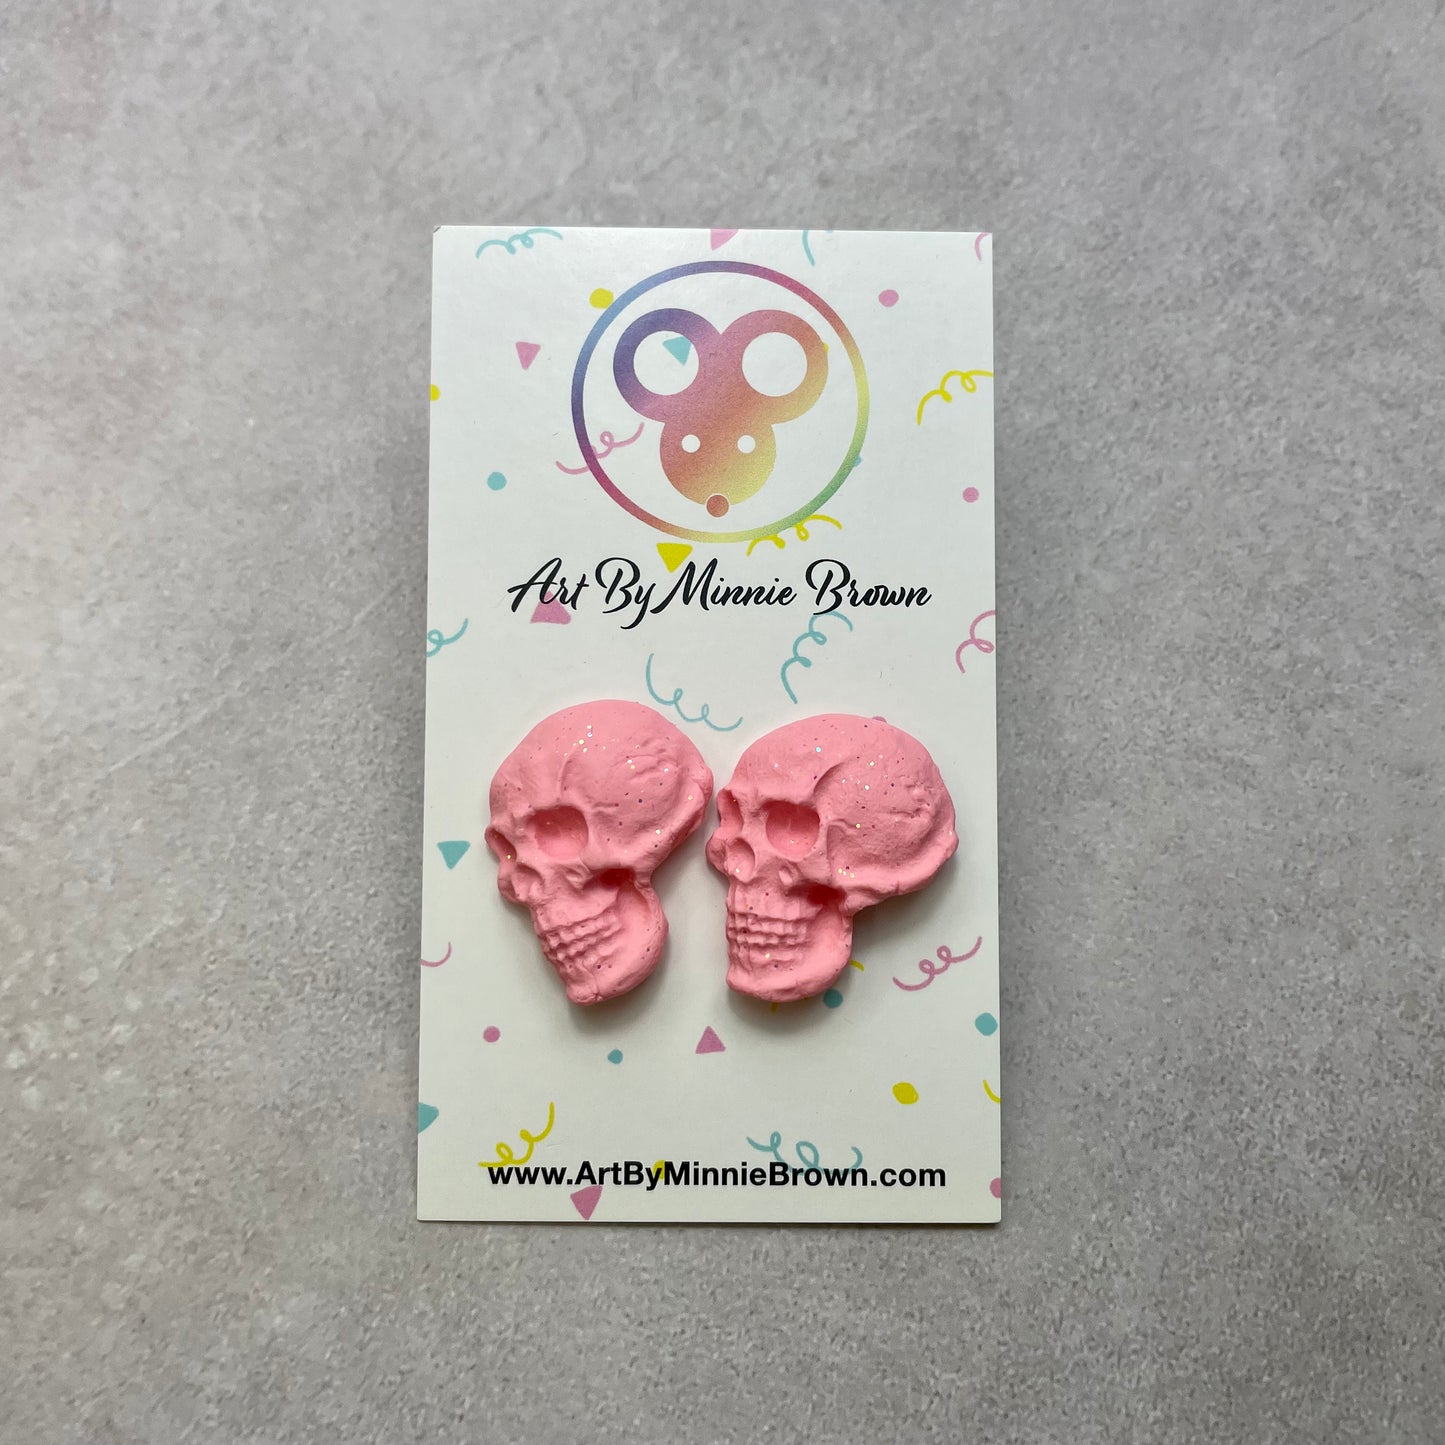 XXL Glitter Pink Skulls Stud Earrings - Perfect for Halloween!